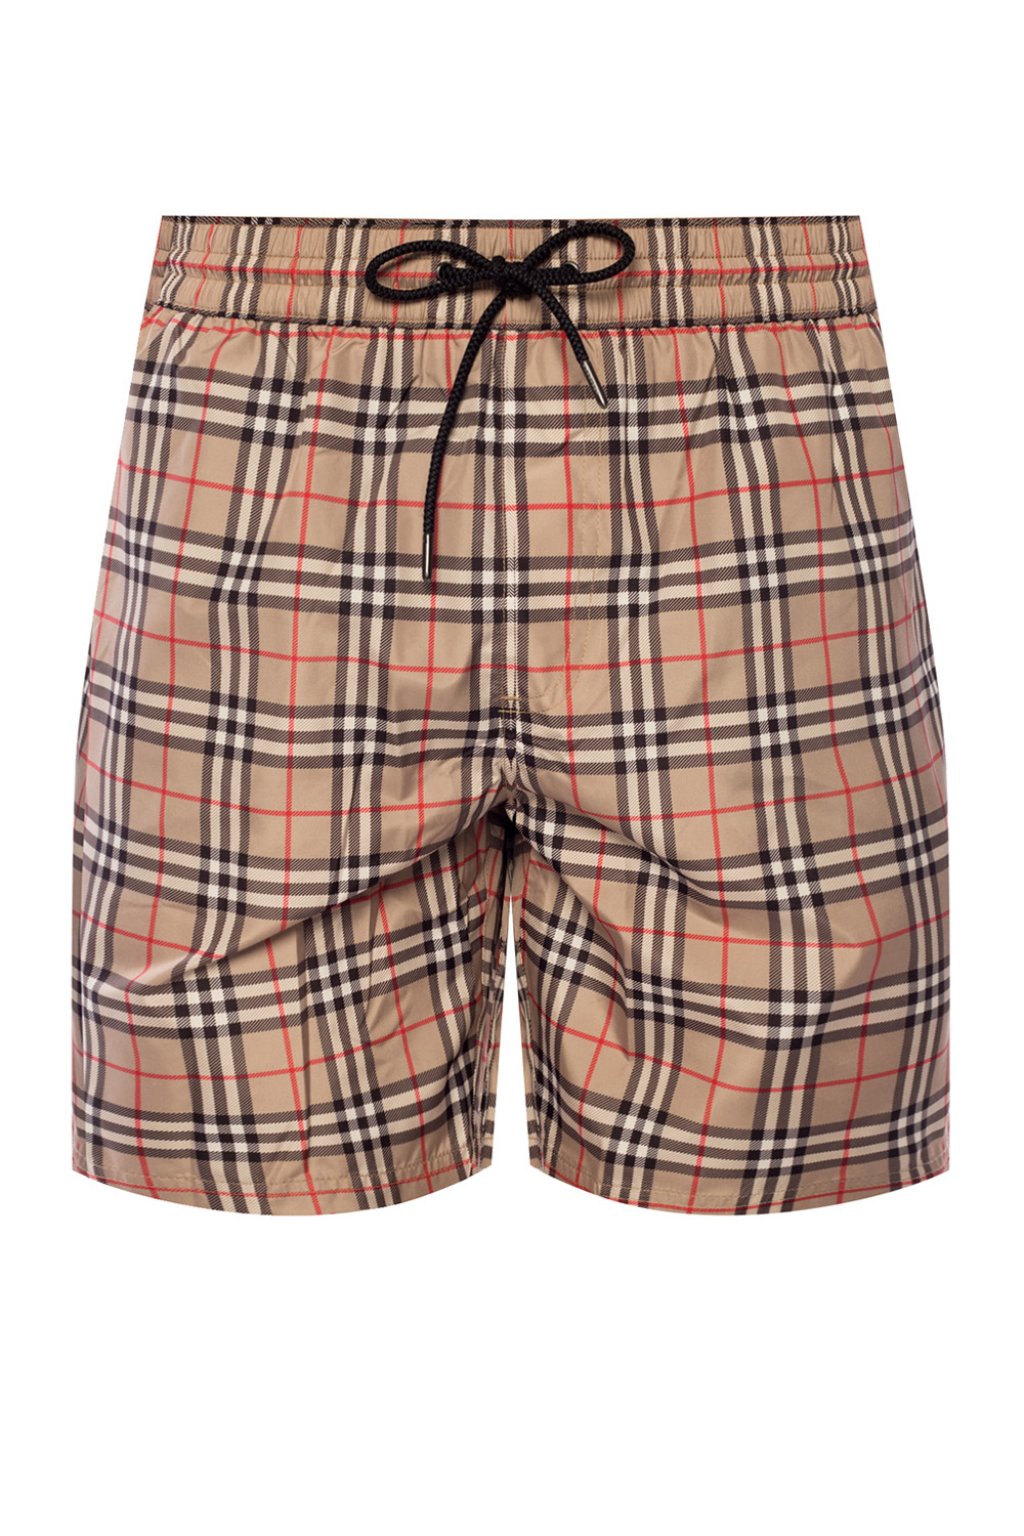 Burberry Check swim shorts, Men's Clothing